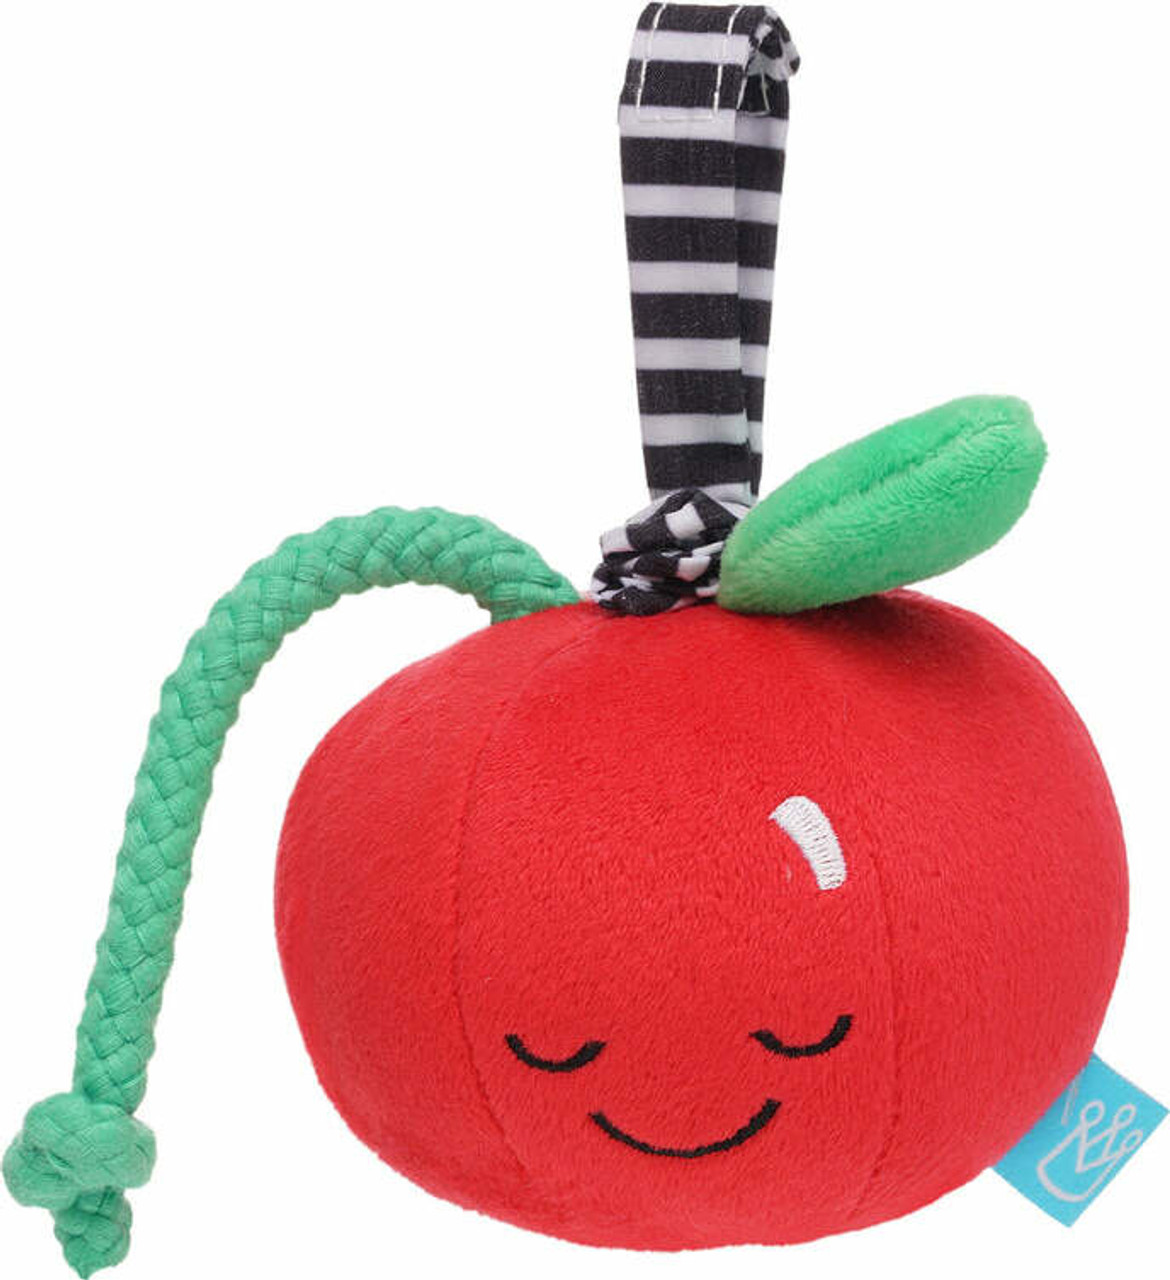 Mini-Apple Farm Cherry Pull Musical Take Along Toy 1